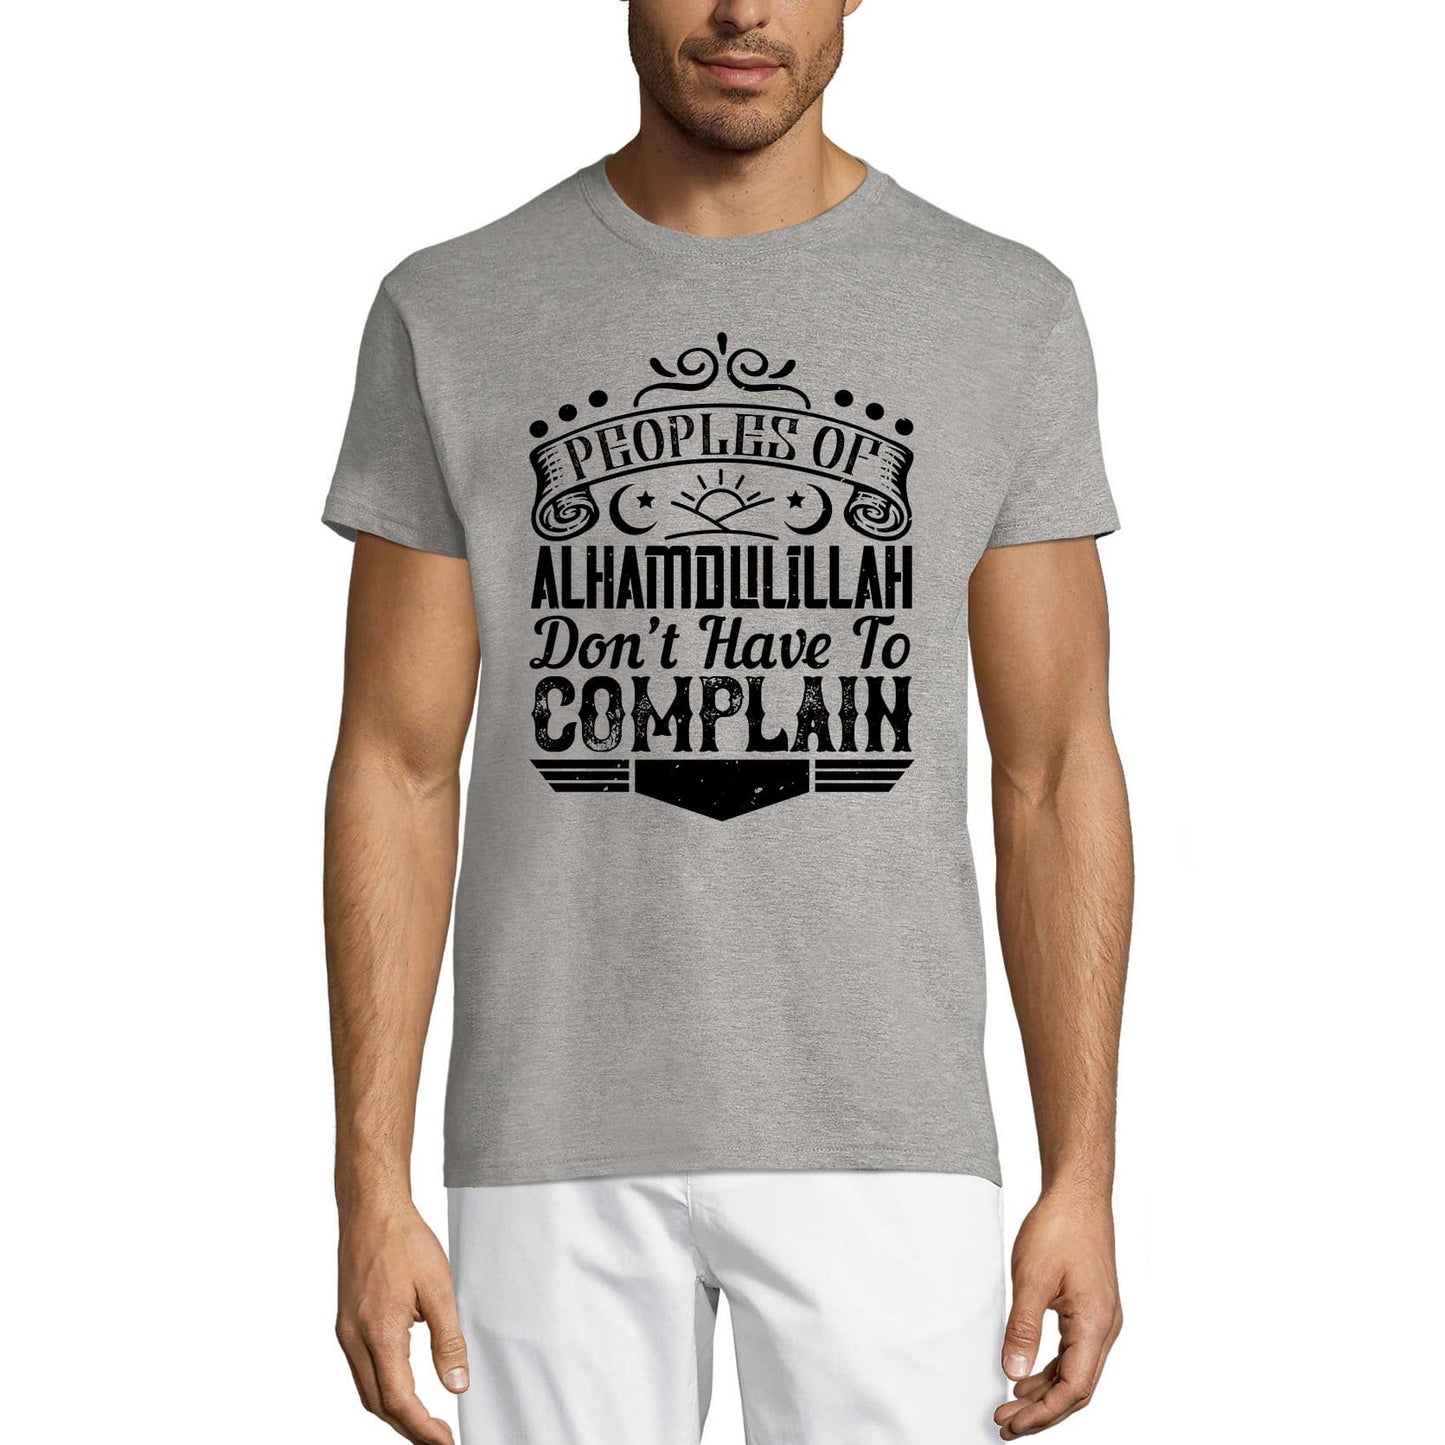 ULTRABASIC Men's T-Shirt Peoples of Alhamdulillah Don't Have to Complain - Muslim Tee Shirt